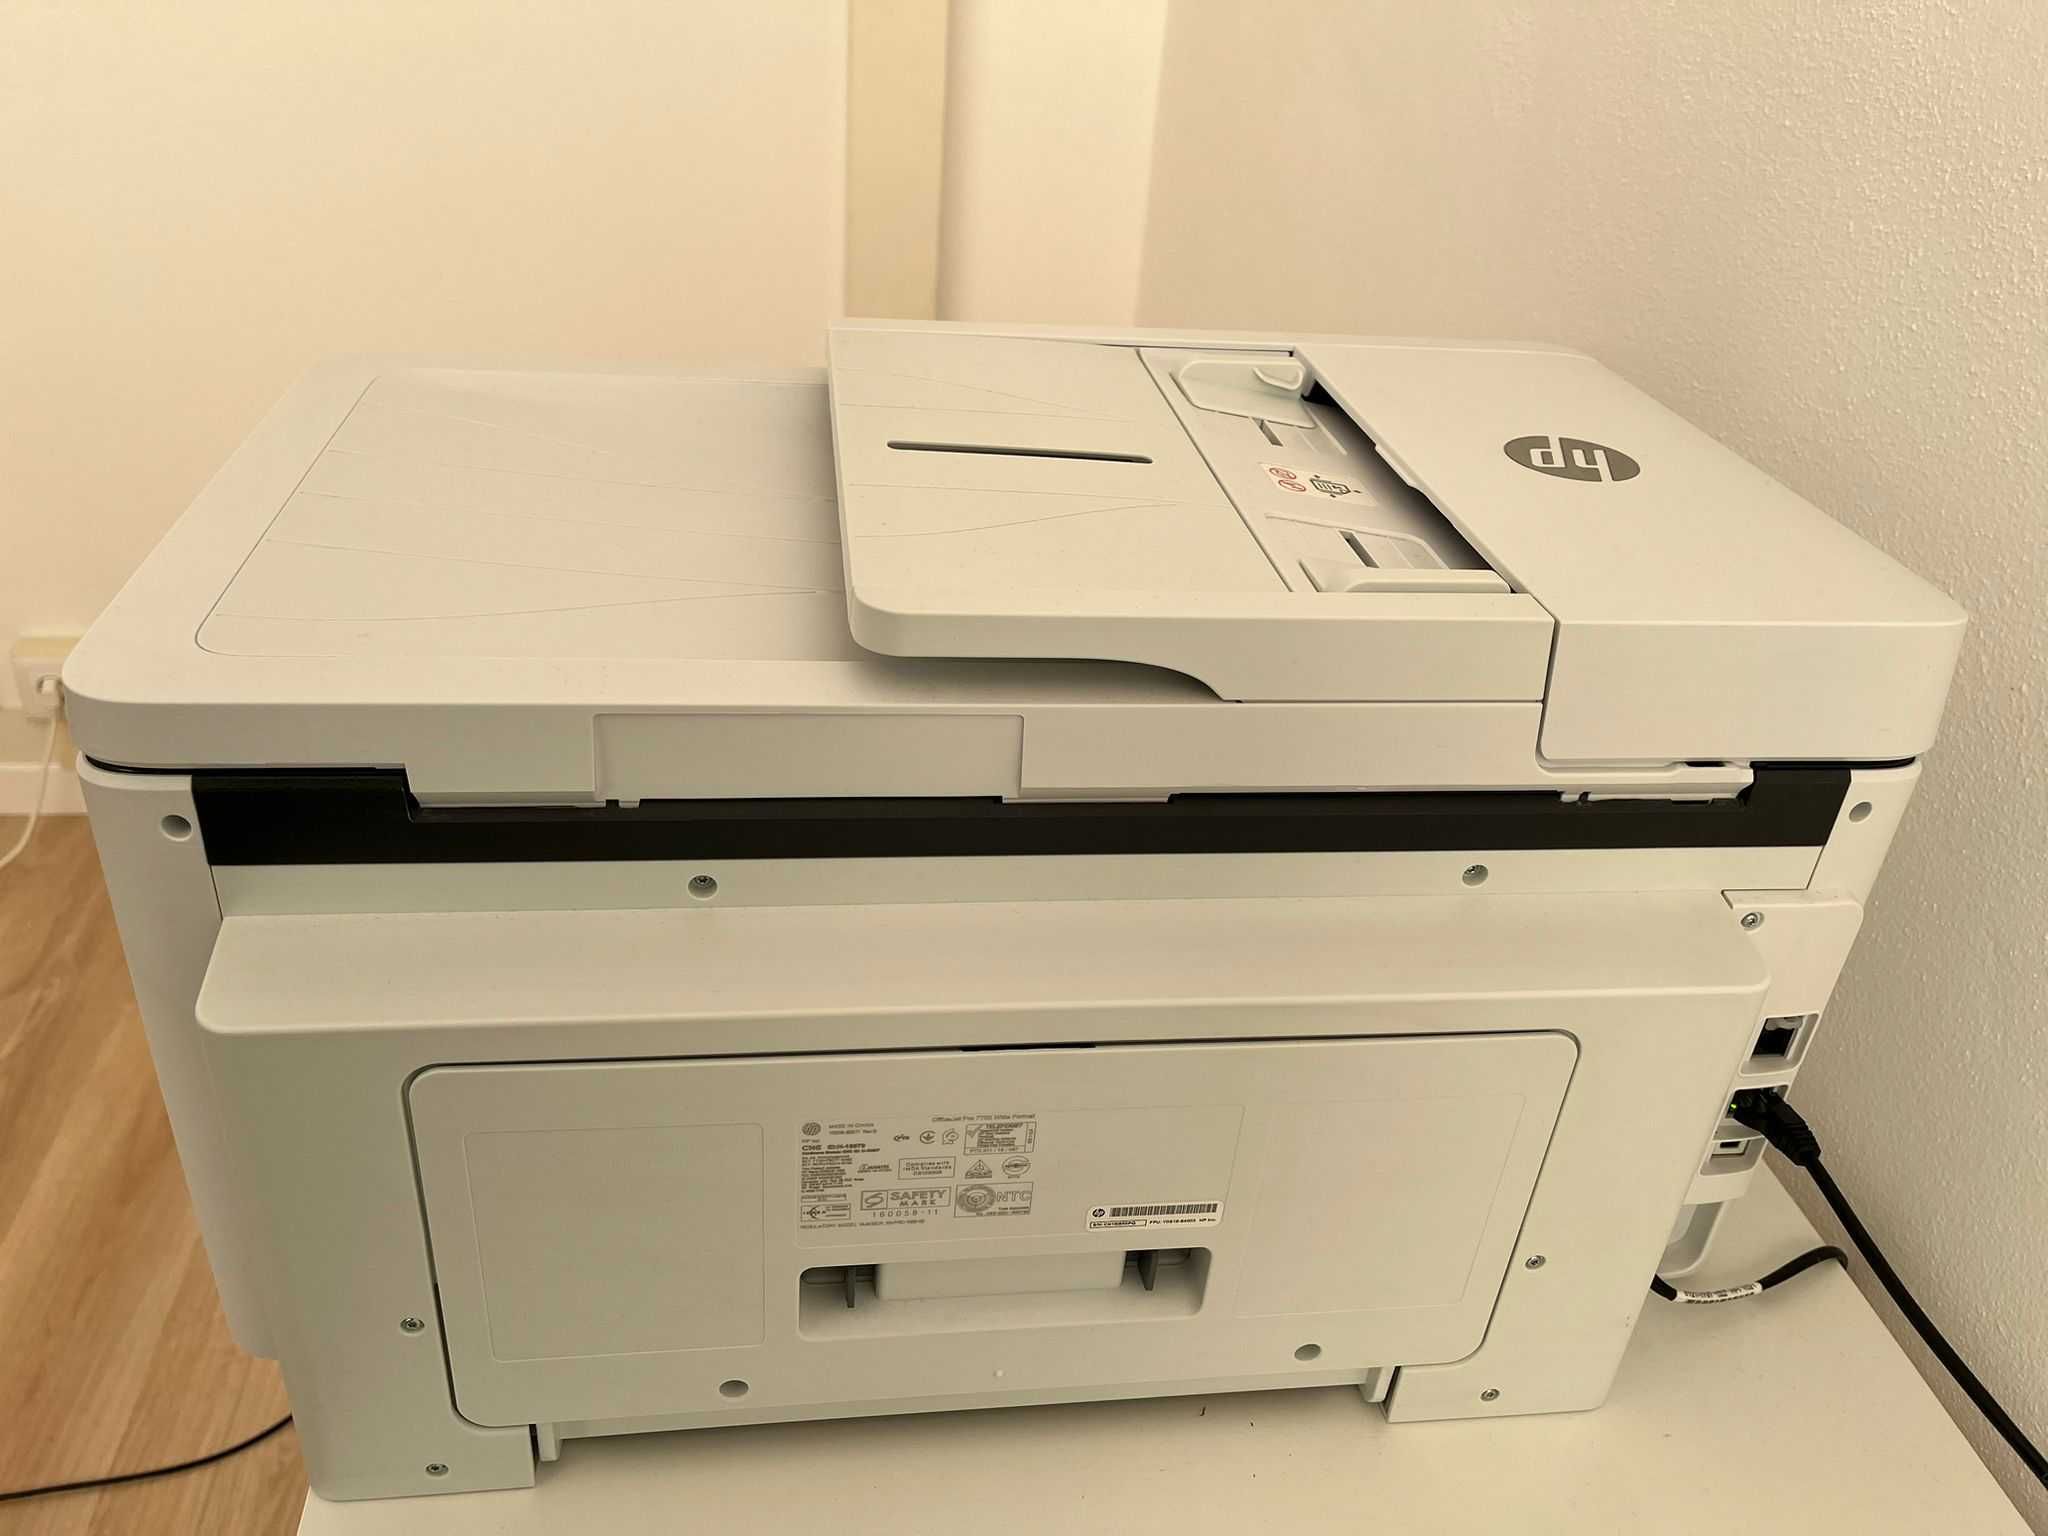 Oportunidade Impressora HP Officejet Pro 7720 A3 RJ11